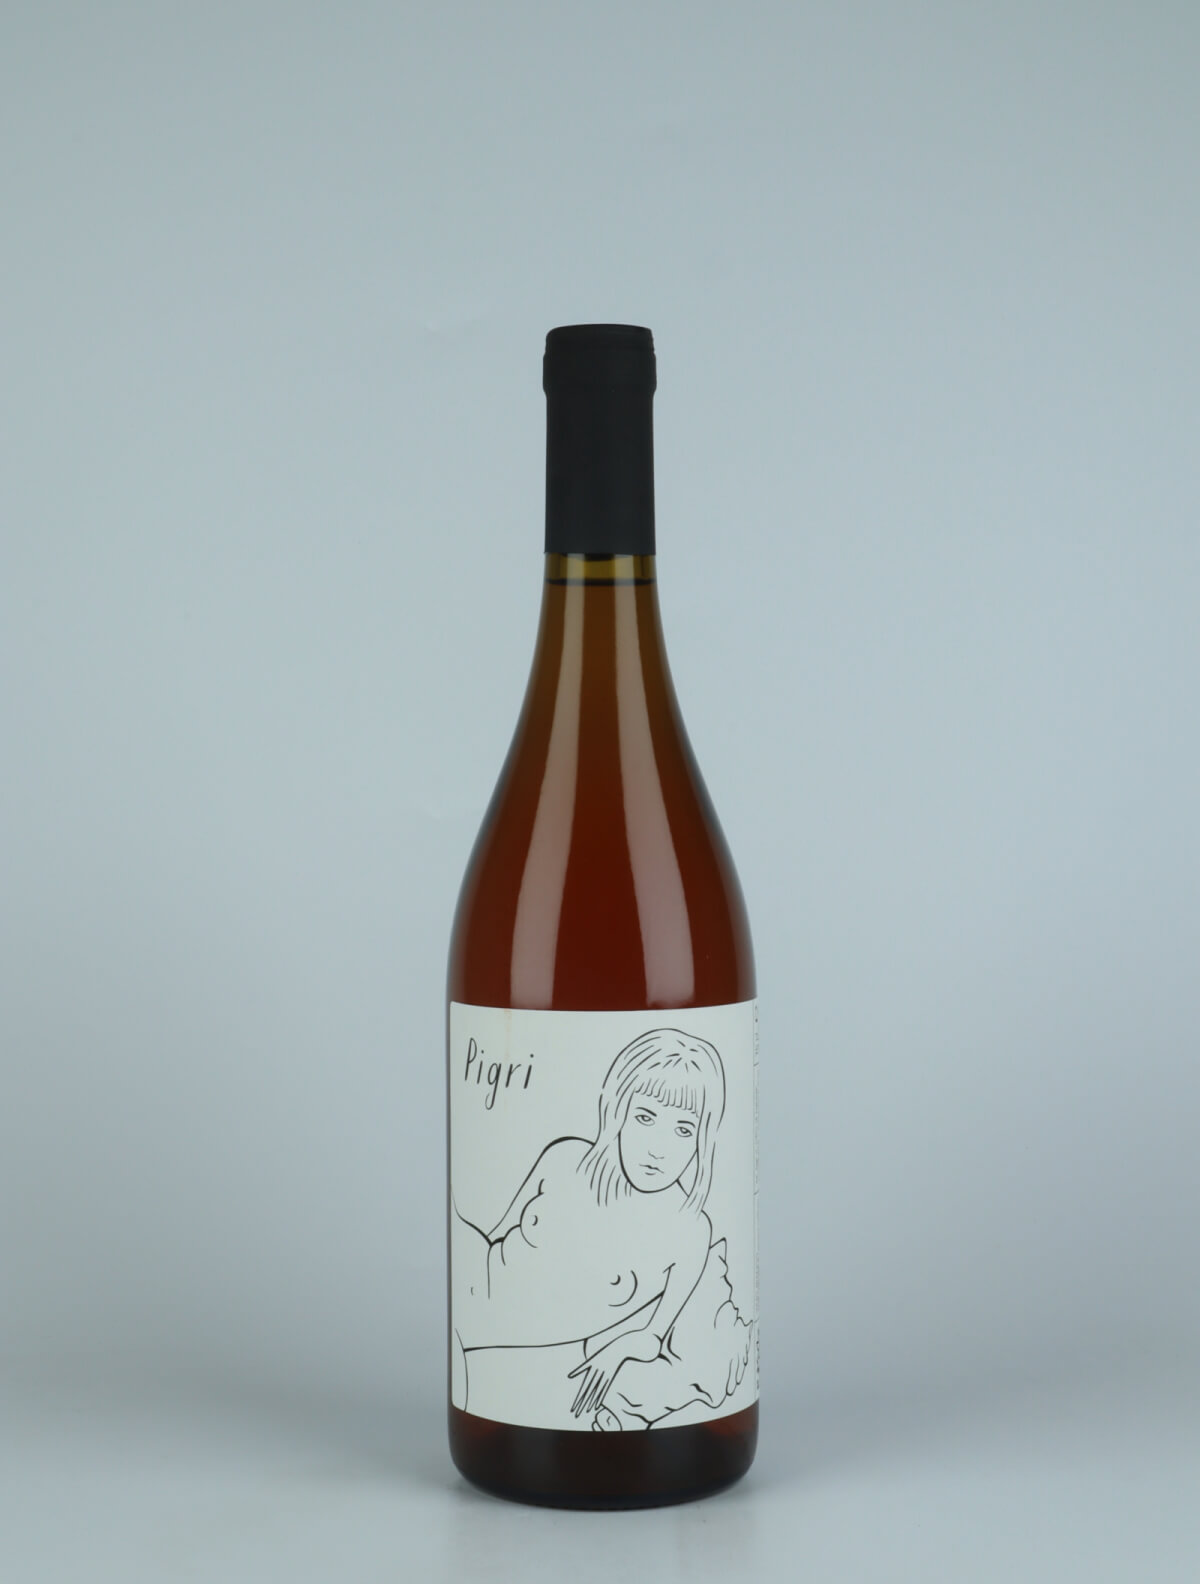 A bottle 2021 Pigri Orange wine from Il Ceo, Veneto in Italy